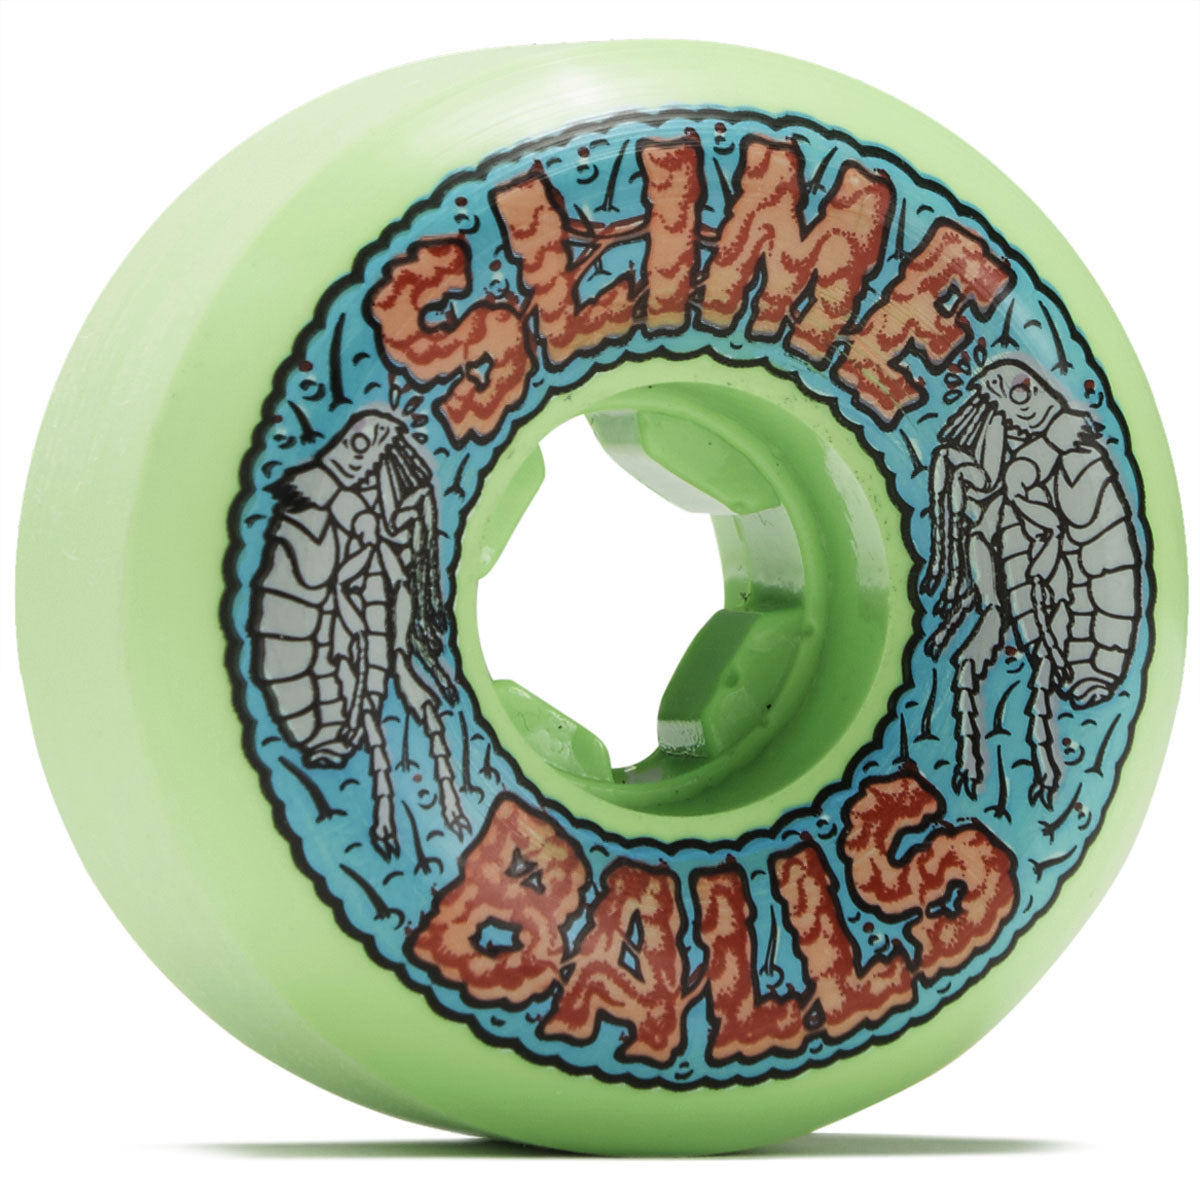 Slime Balls Flea Balls Speed Balls Skateboard Wheels - Green - 56mm image 1